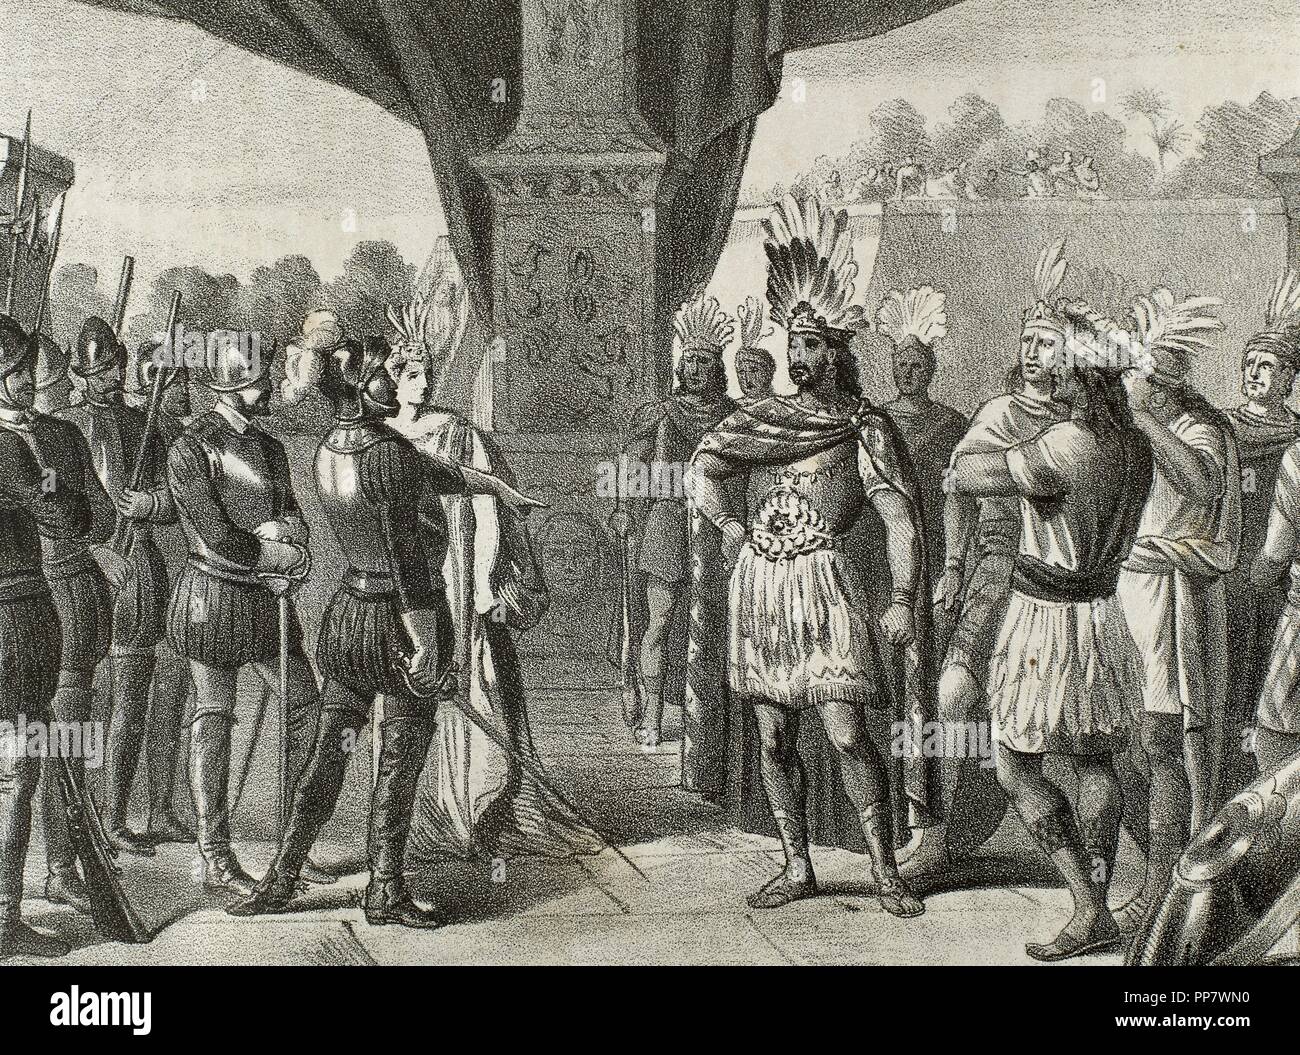 Moctezuma II (c. 1466 Ð 29 June 1520). Ninth tlatoani or ruler of Tenochtitlan, reigning from 1502 to 1520. Hernan Cortes takes prisoner Moctezuma II. Engraving, 1875. Stock Photo